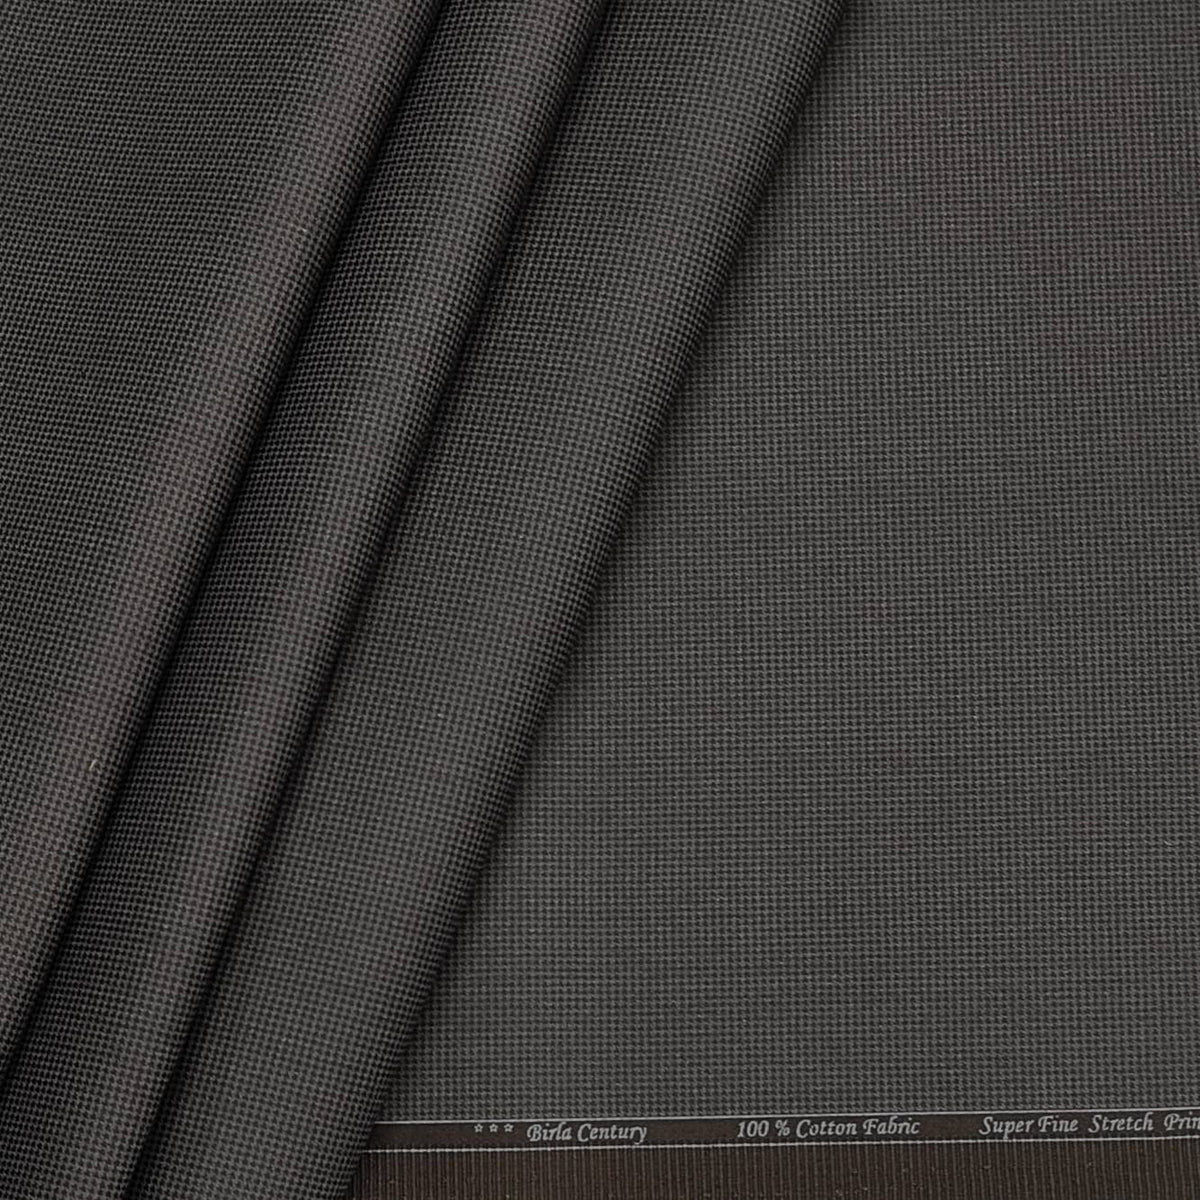 Birla Century Men's Pure Cotton Premium Stretchable Printed Trouser Fabric (Colour Brown)